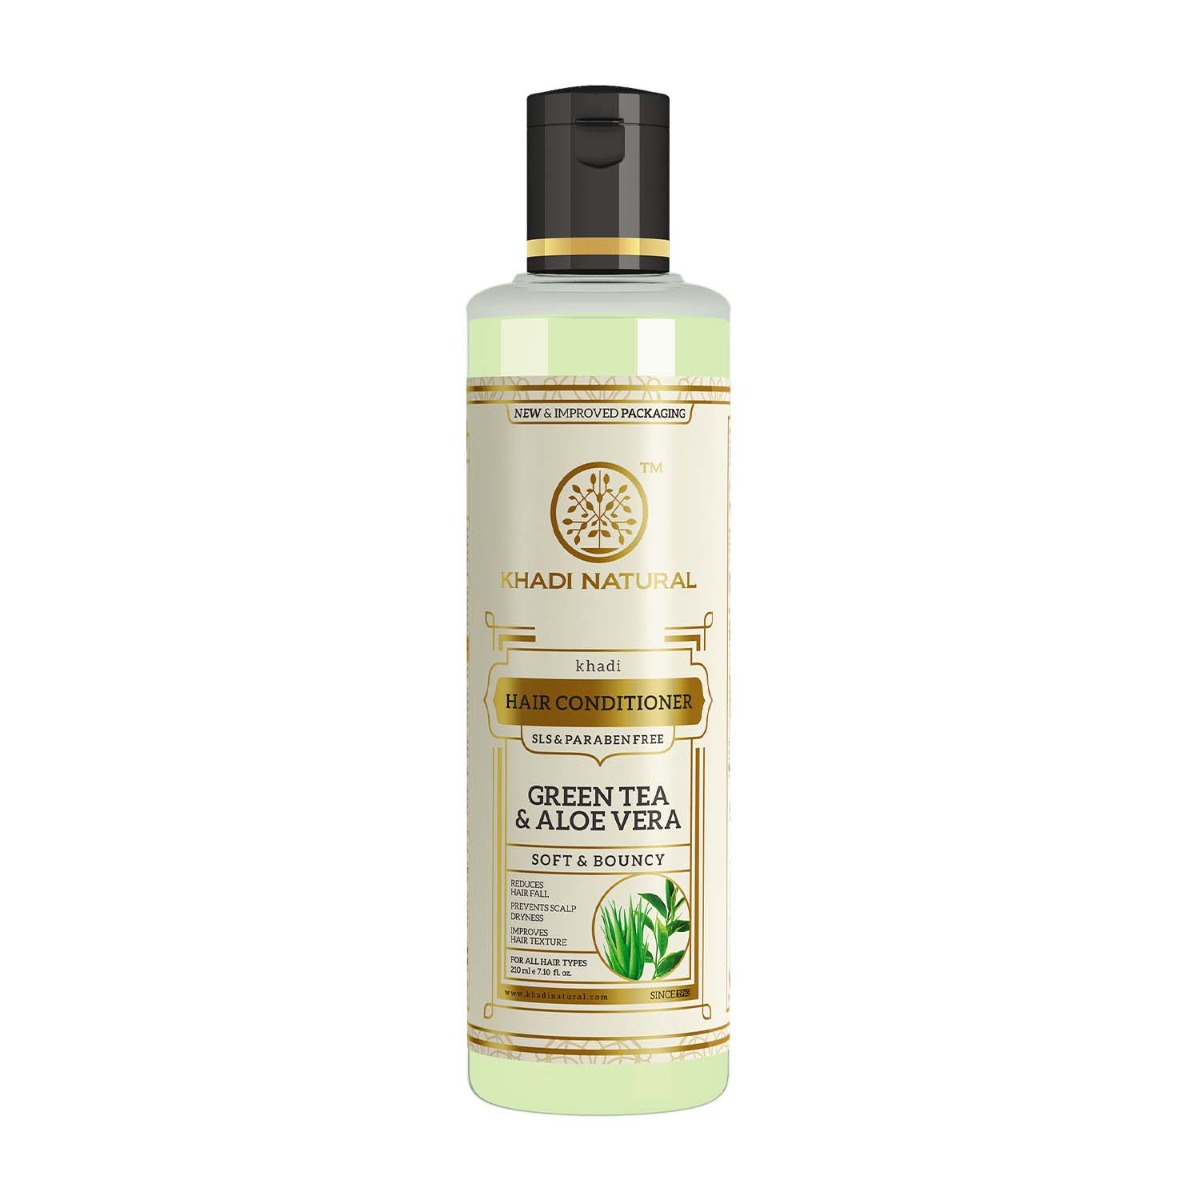 Khadi Natural Green Tea Aloe Vera Hair Conditioner, SLS & Paraben Free, 210ml